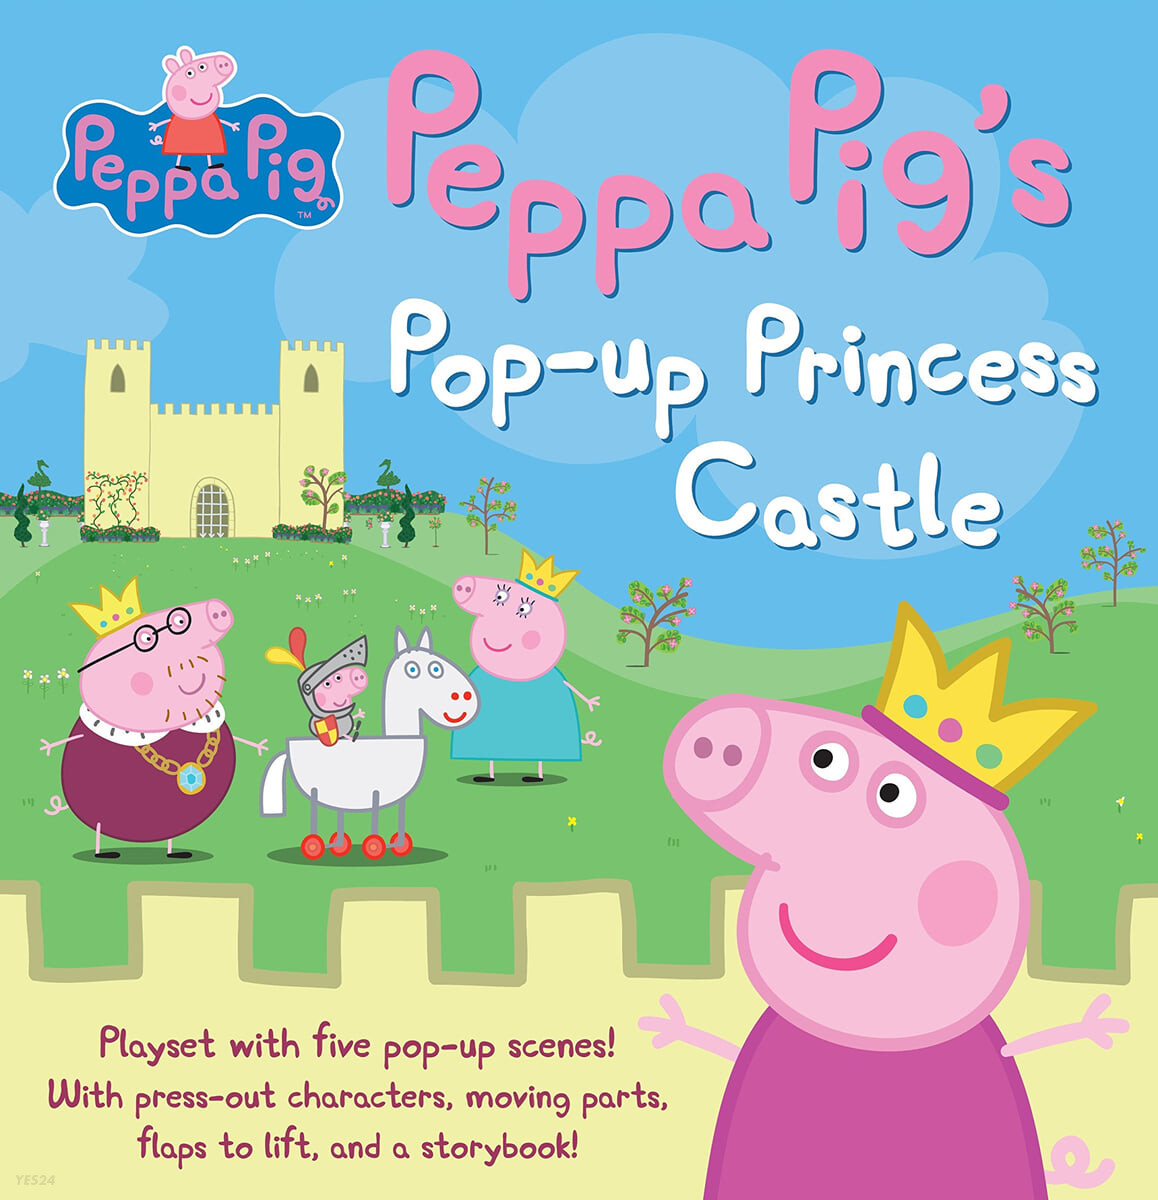 Peppa Pigs pop-up princess castle